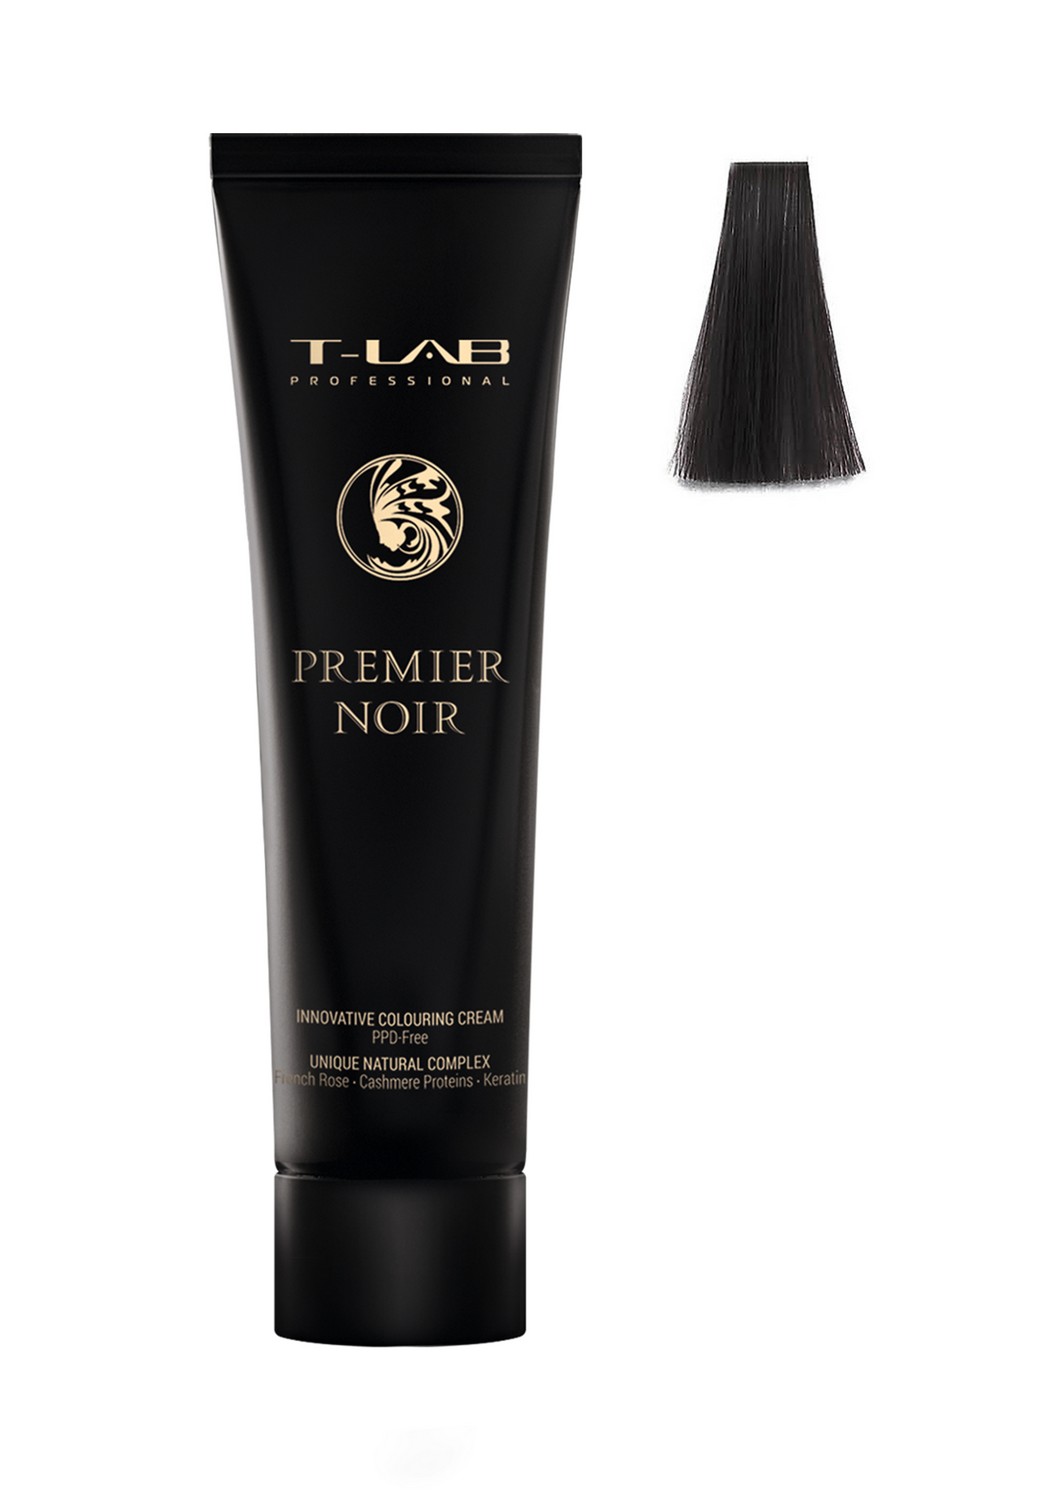 Крем-краска T-LAB Professional Premier Noir colouring cream, оттенок 6.01 (dark blonde natural ash) - фото 2